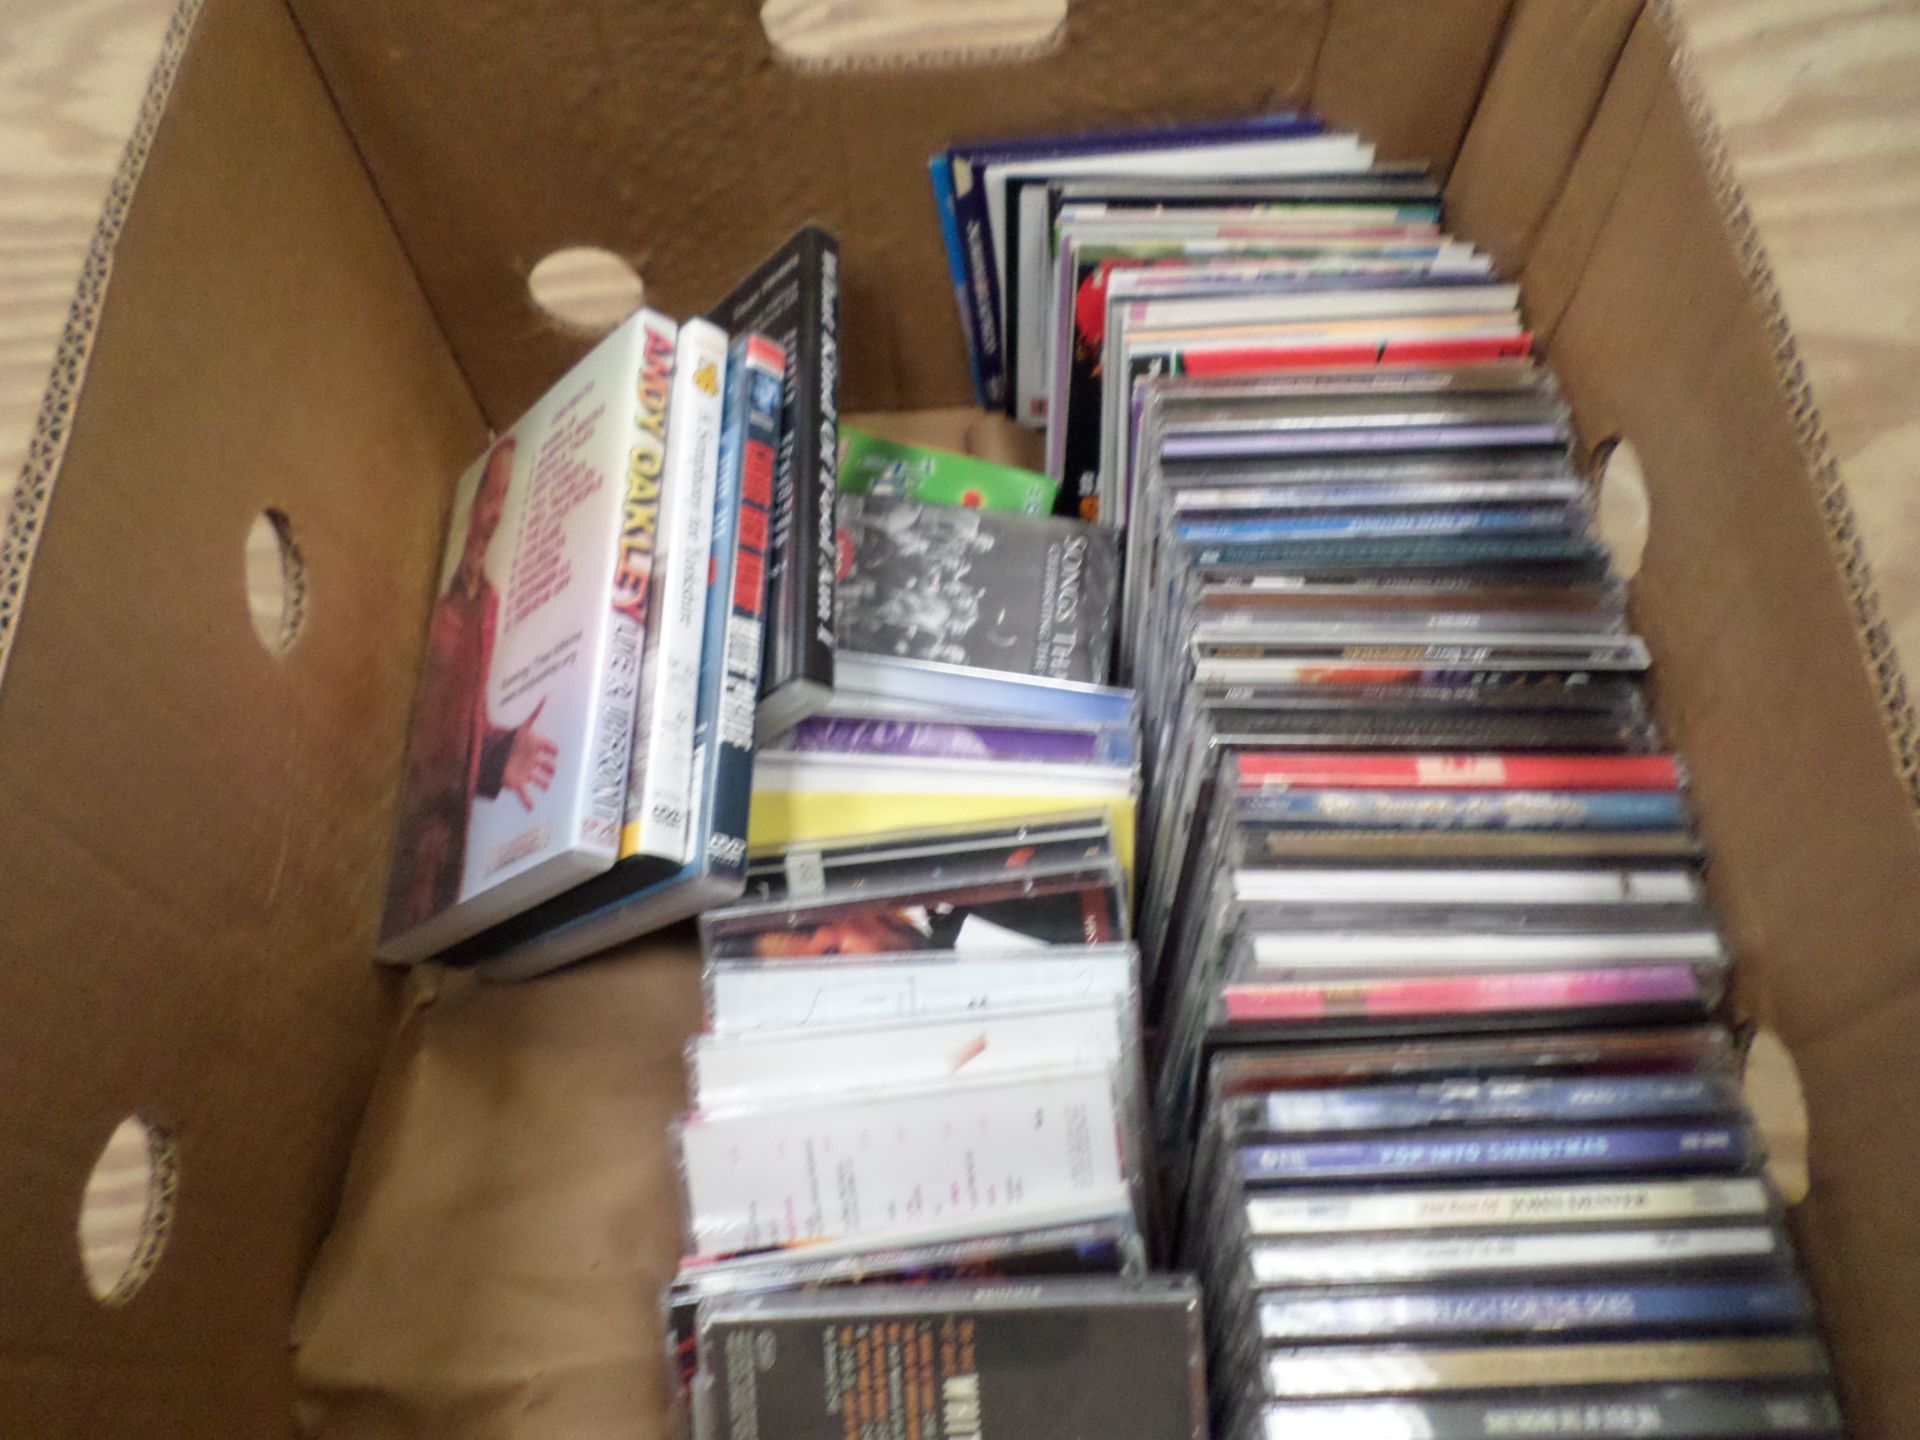 Box of books, box of CDs